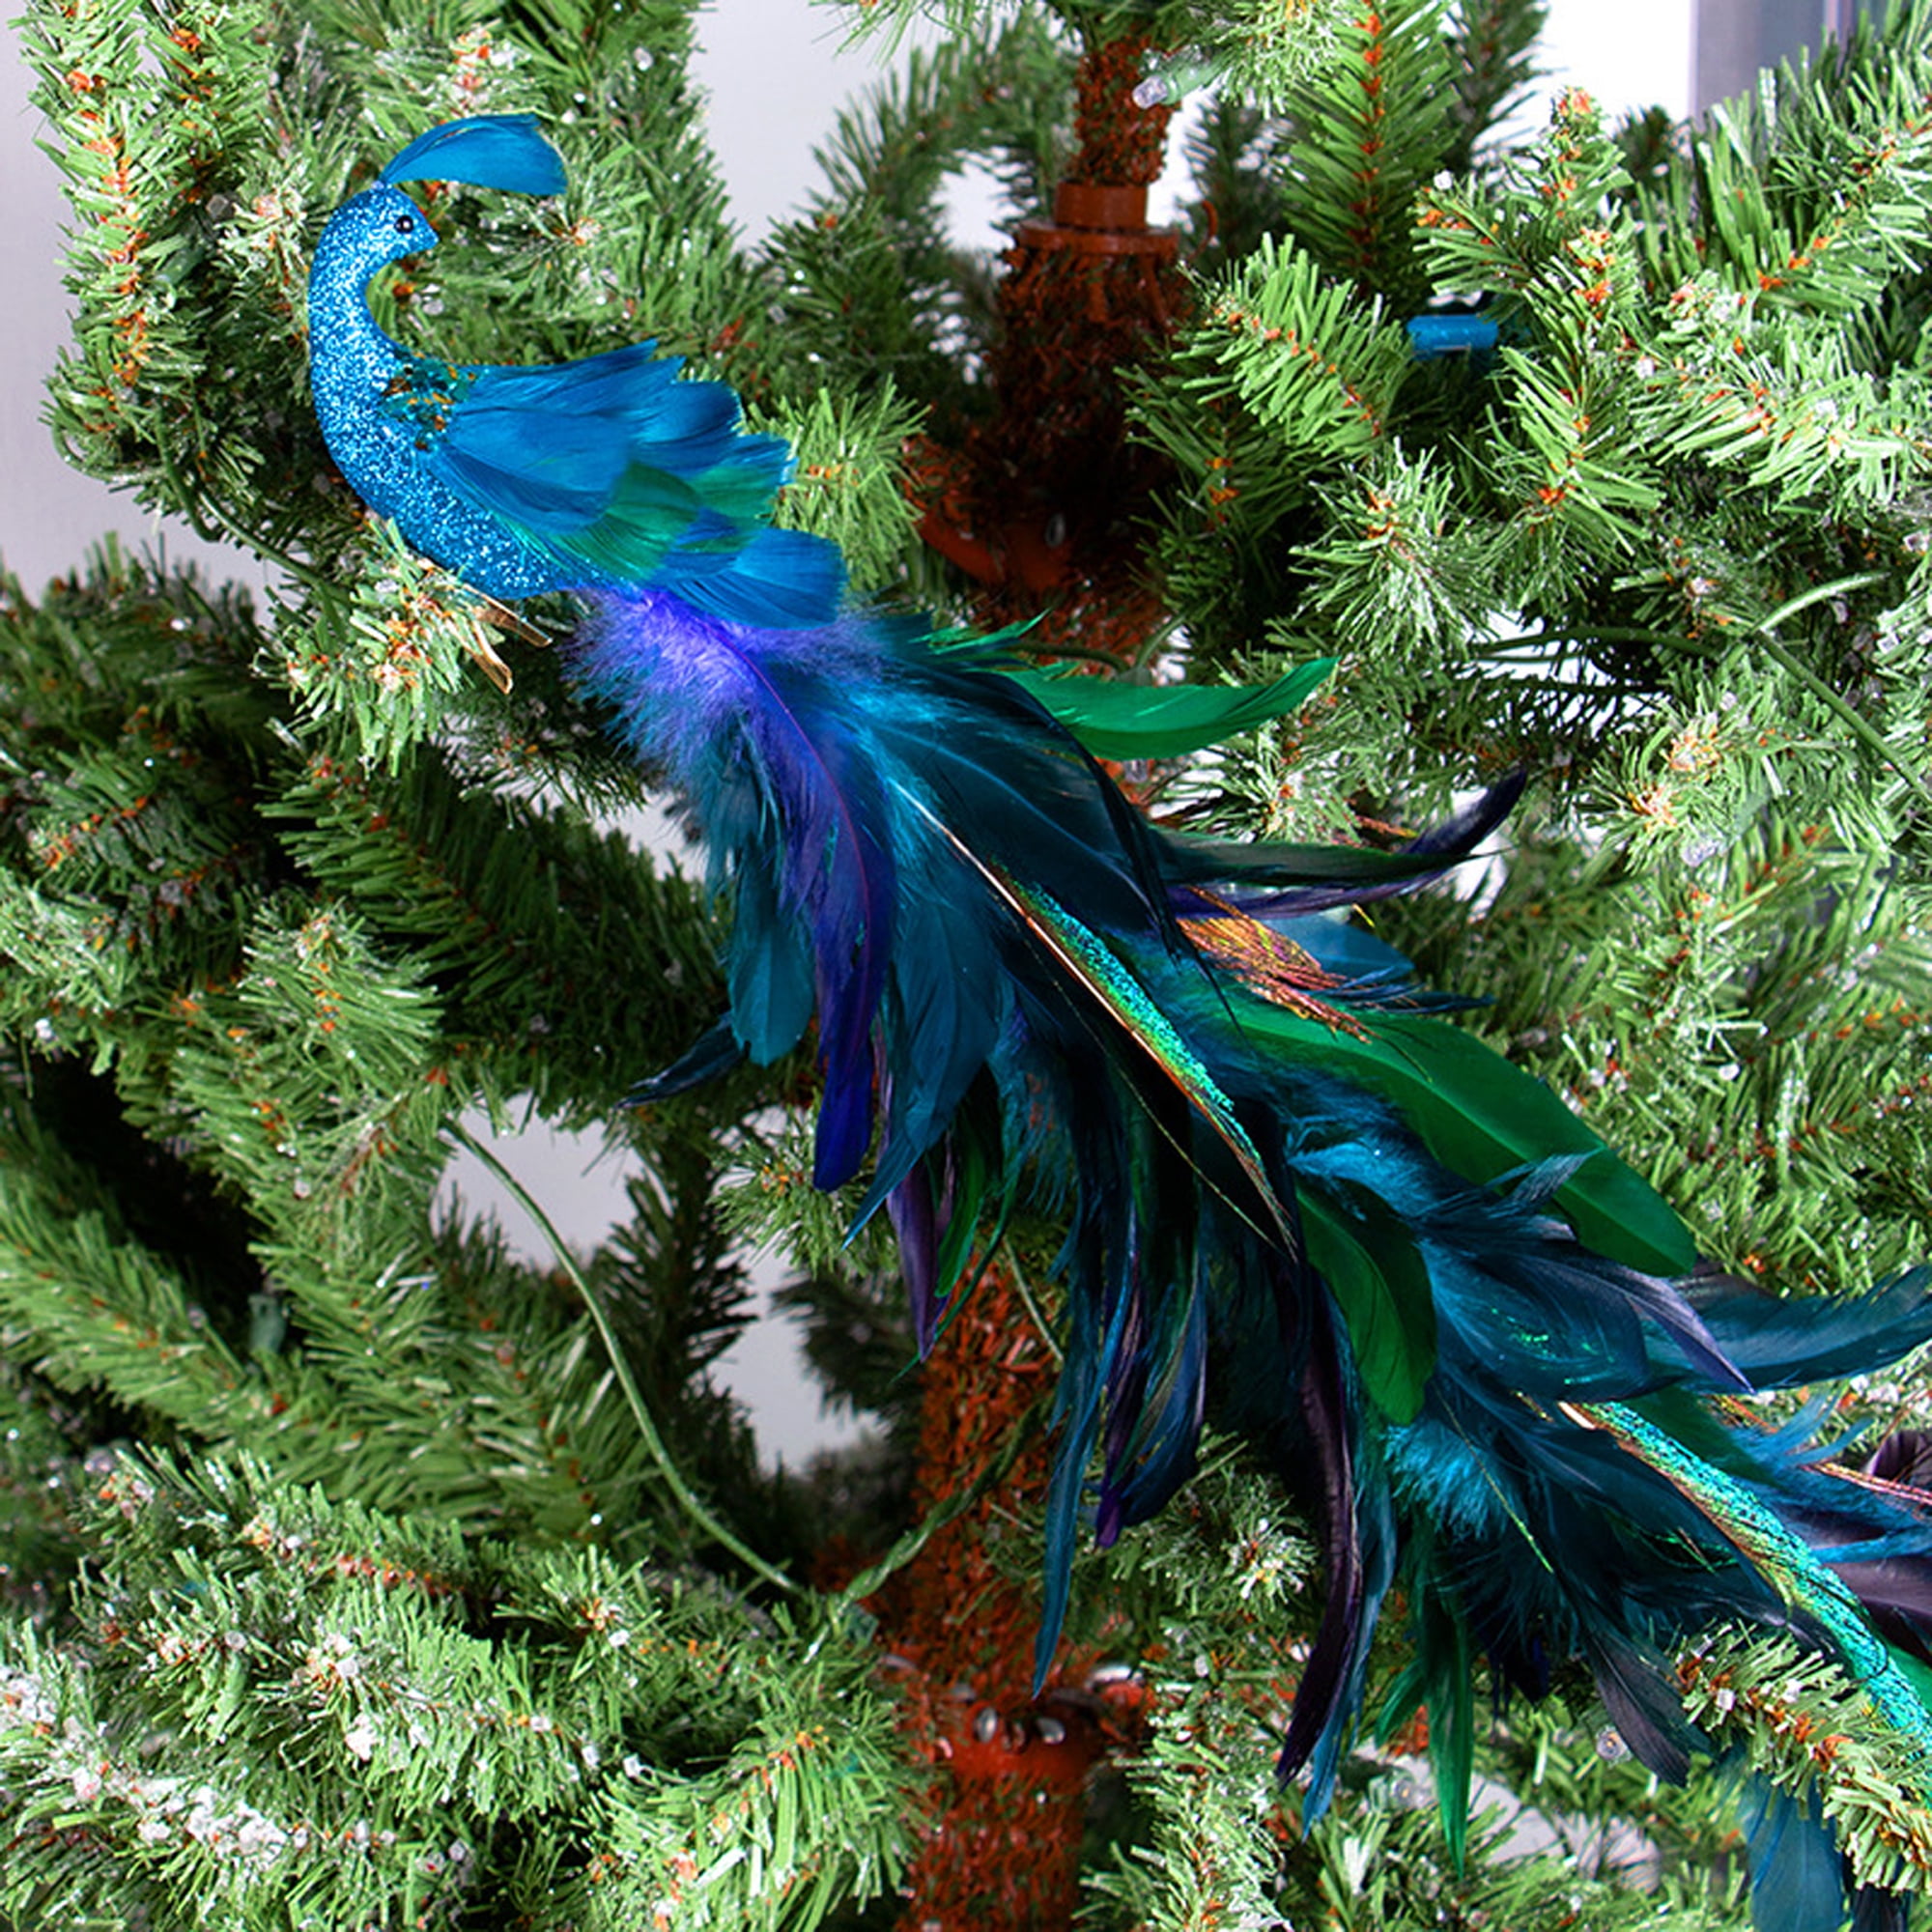 Kalindi Kunis Blue Peacock Ornament #2 by Holiday Ornaments